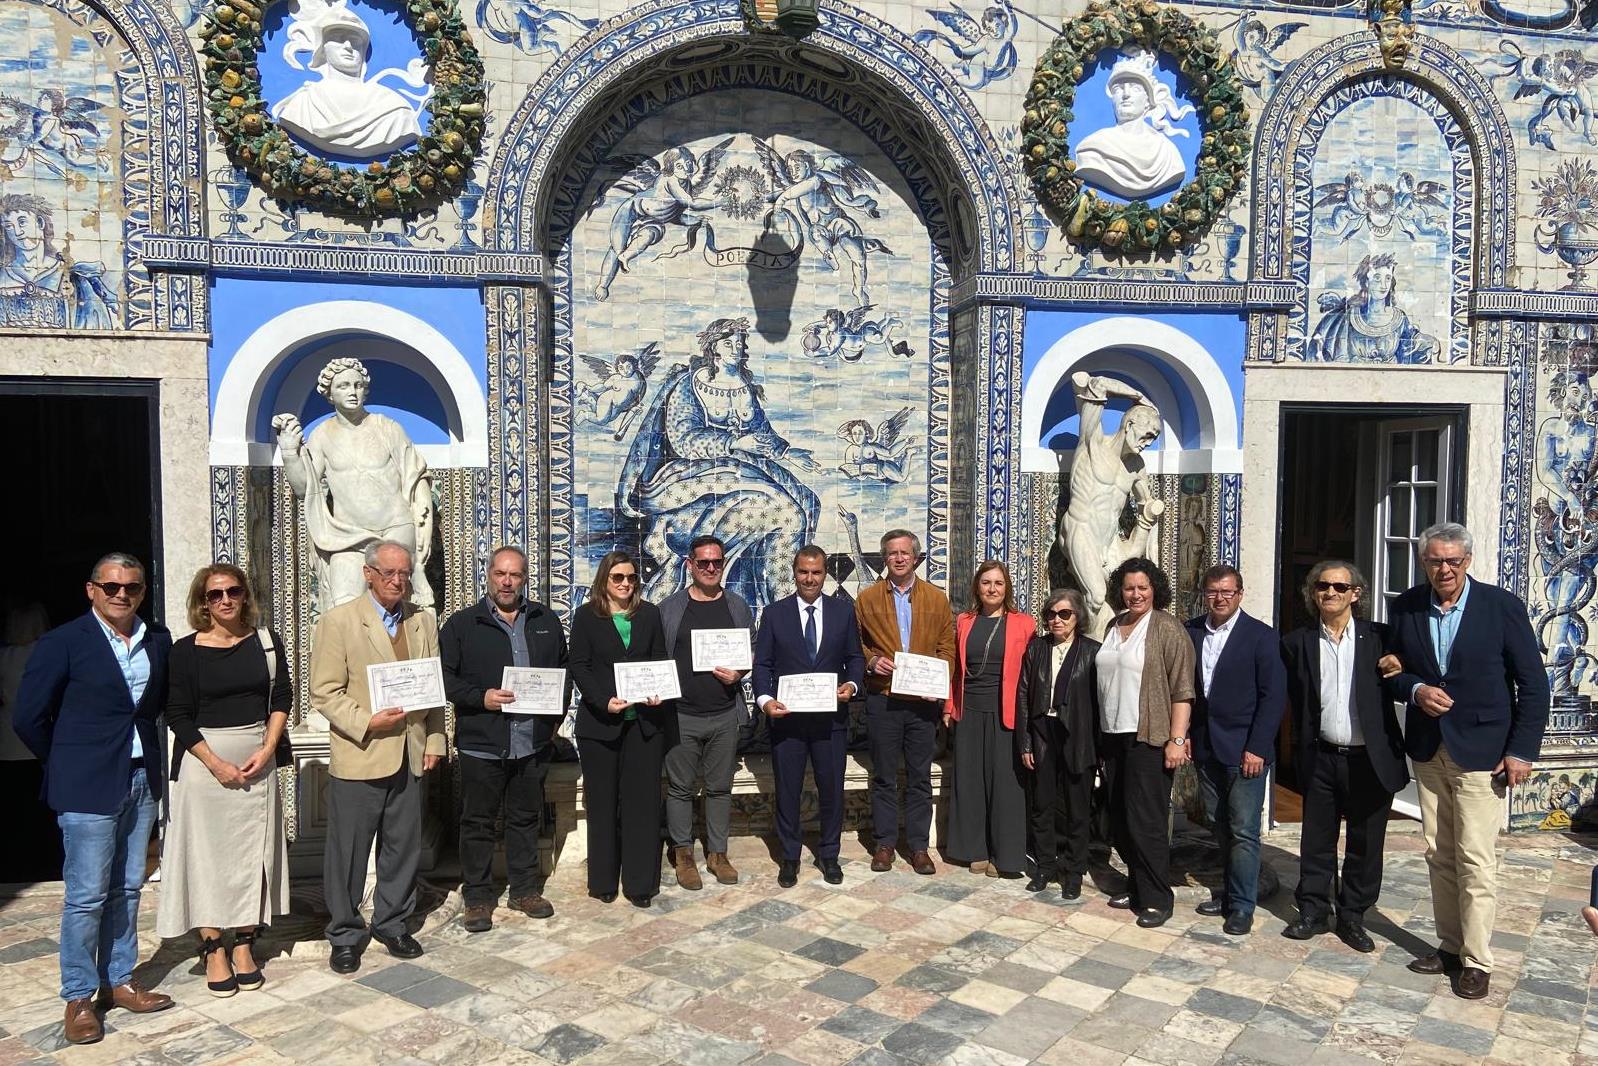 Património | ‘Monforte Sacro’ recebeu o prémio SOS Azulejo 